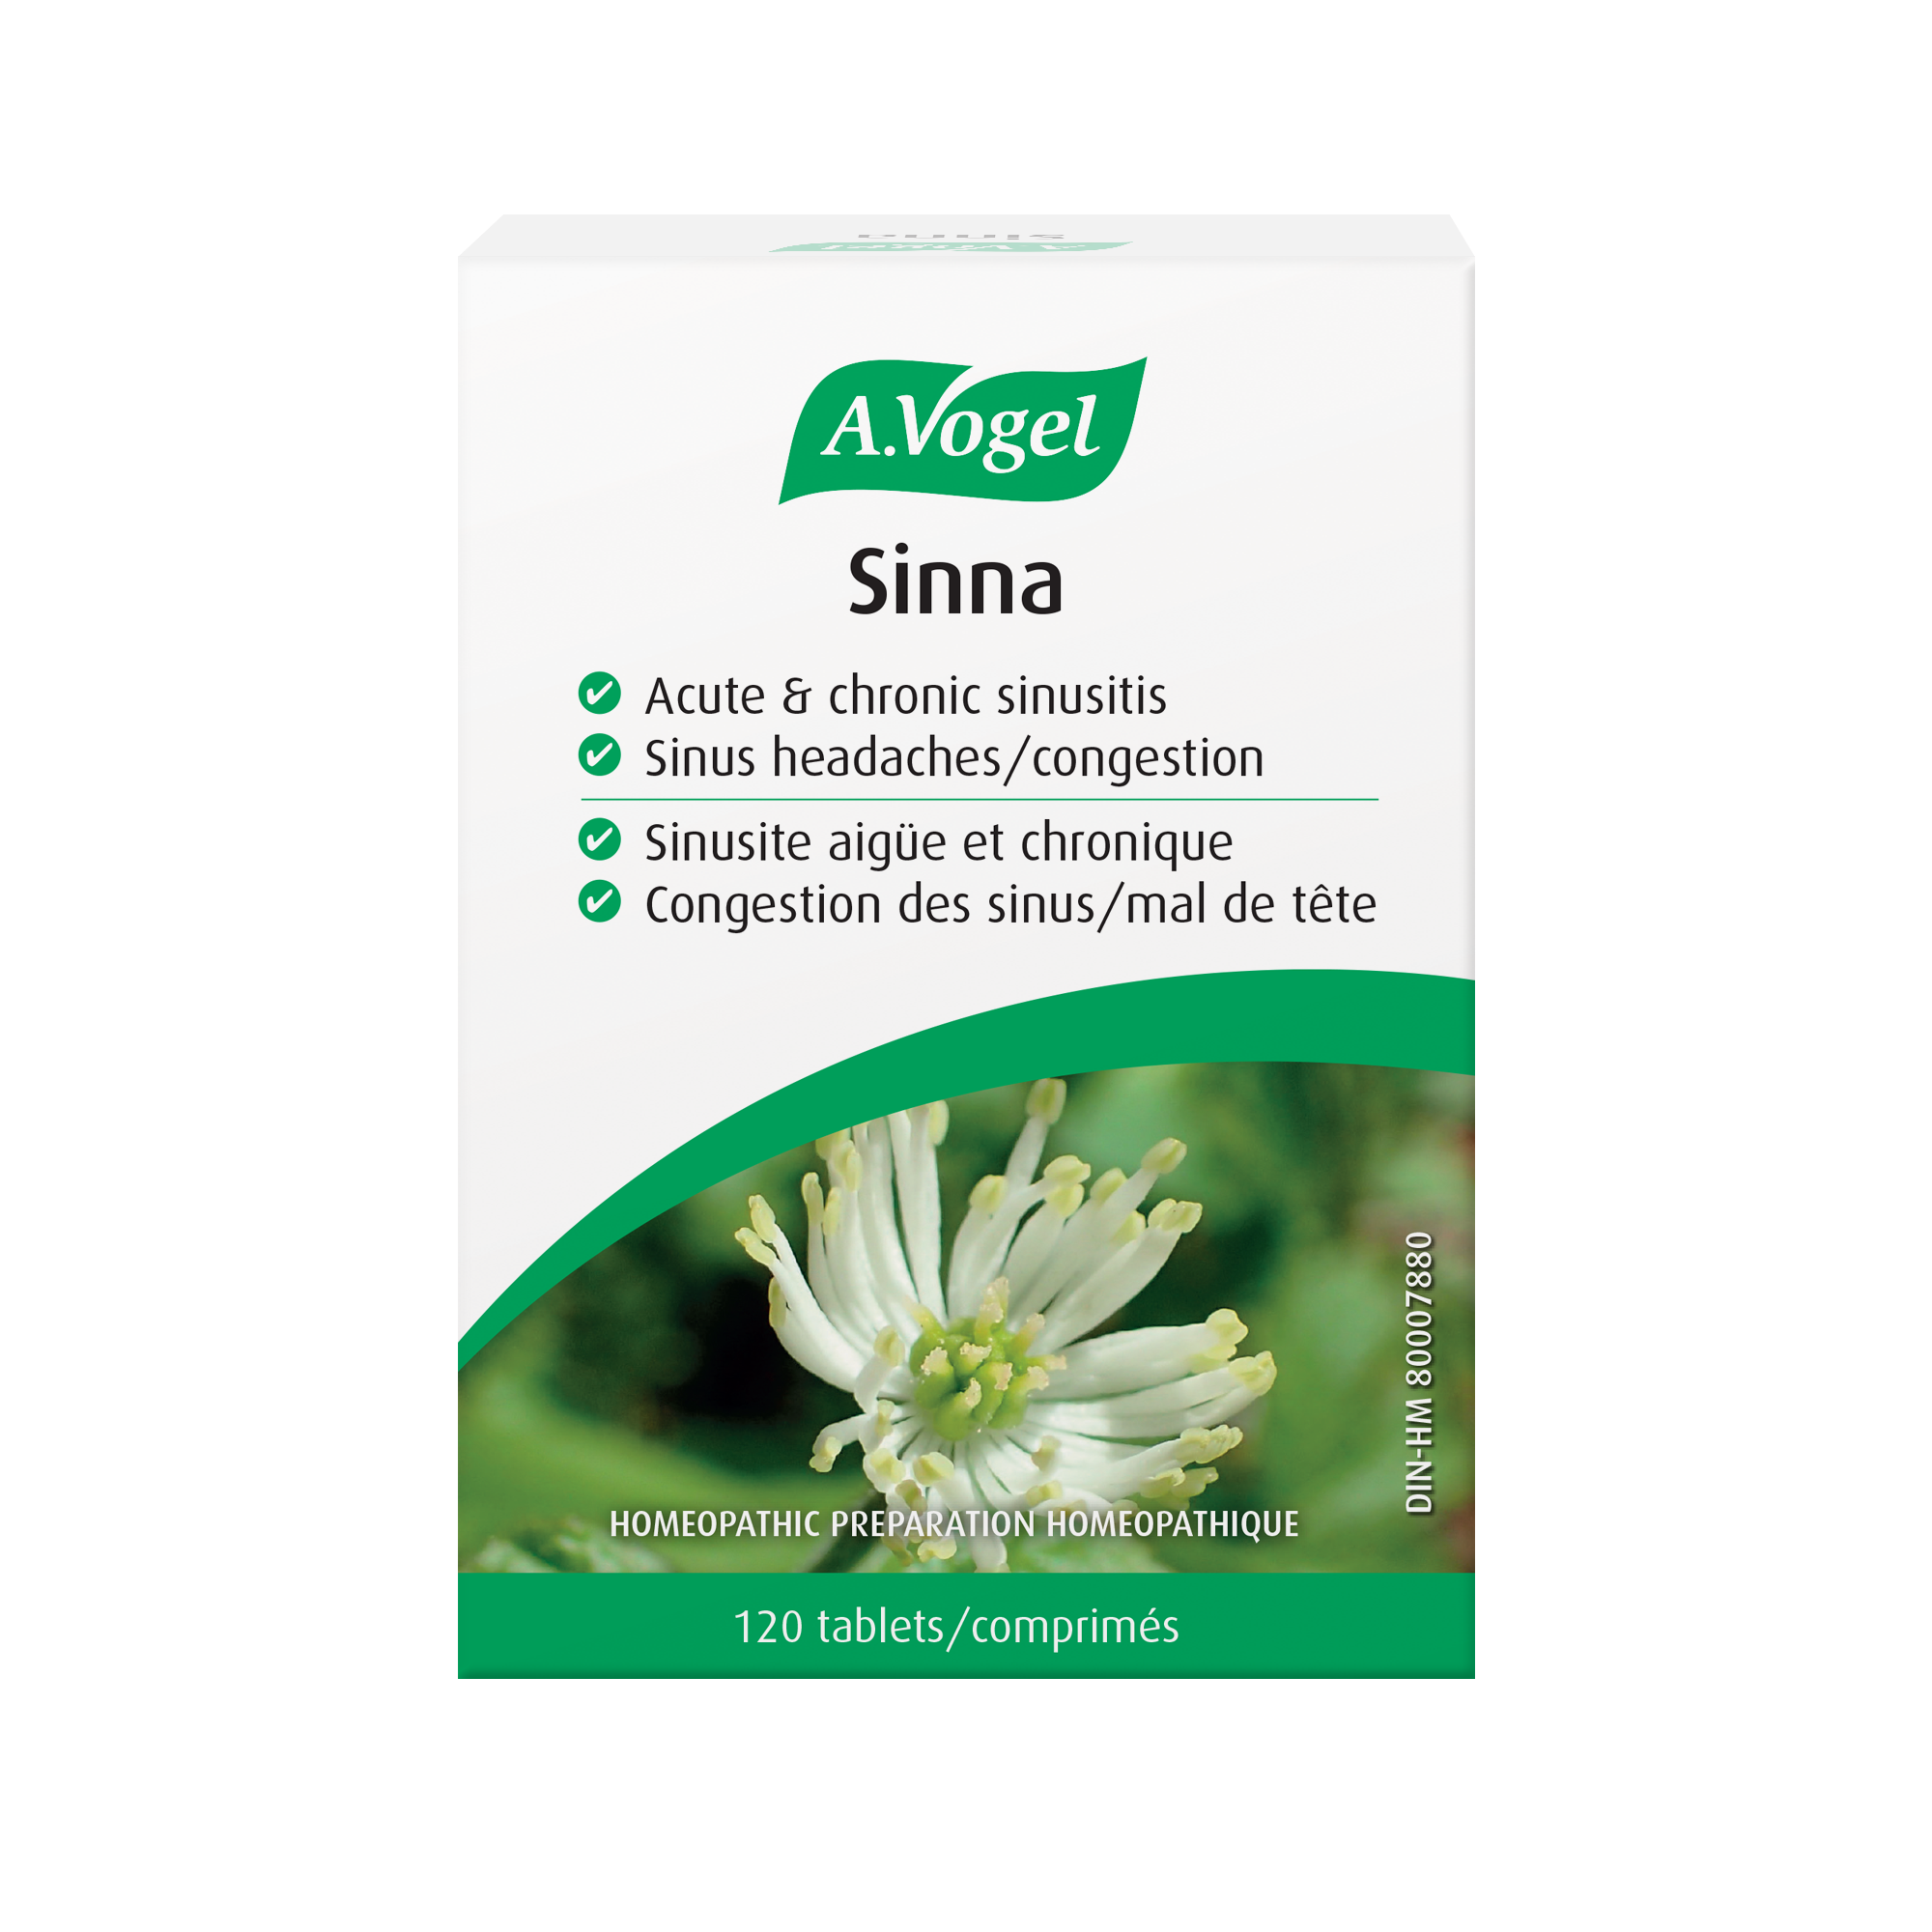 A. Vogel Sinna 120 Tablets